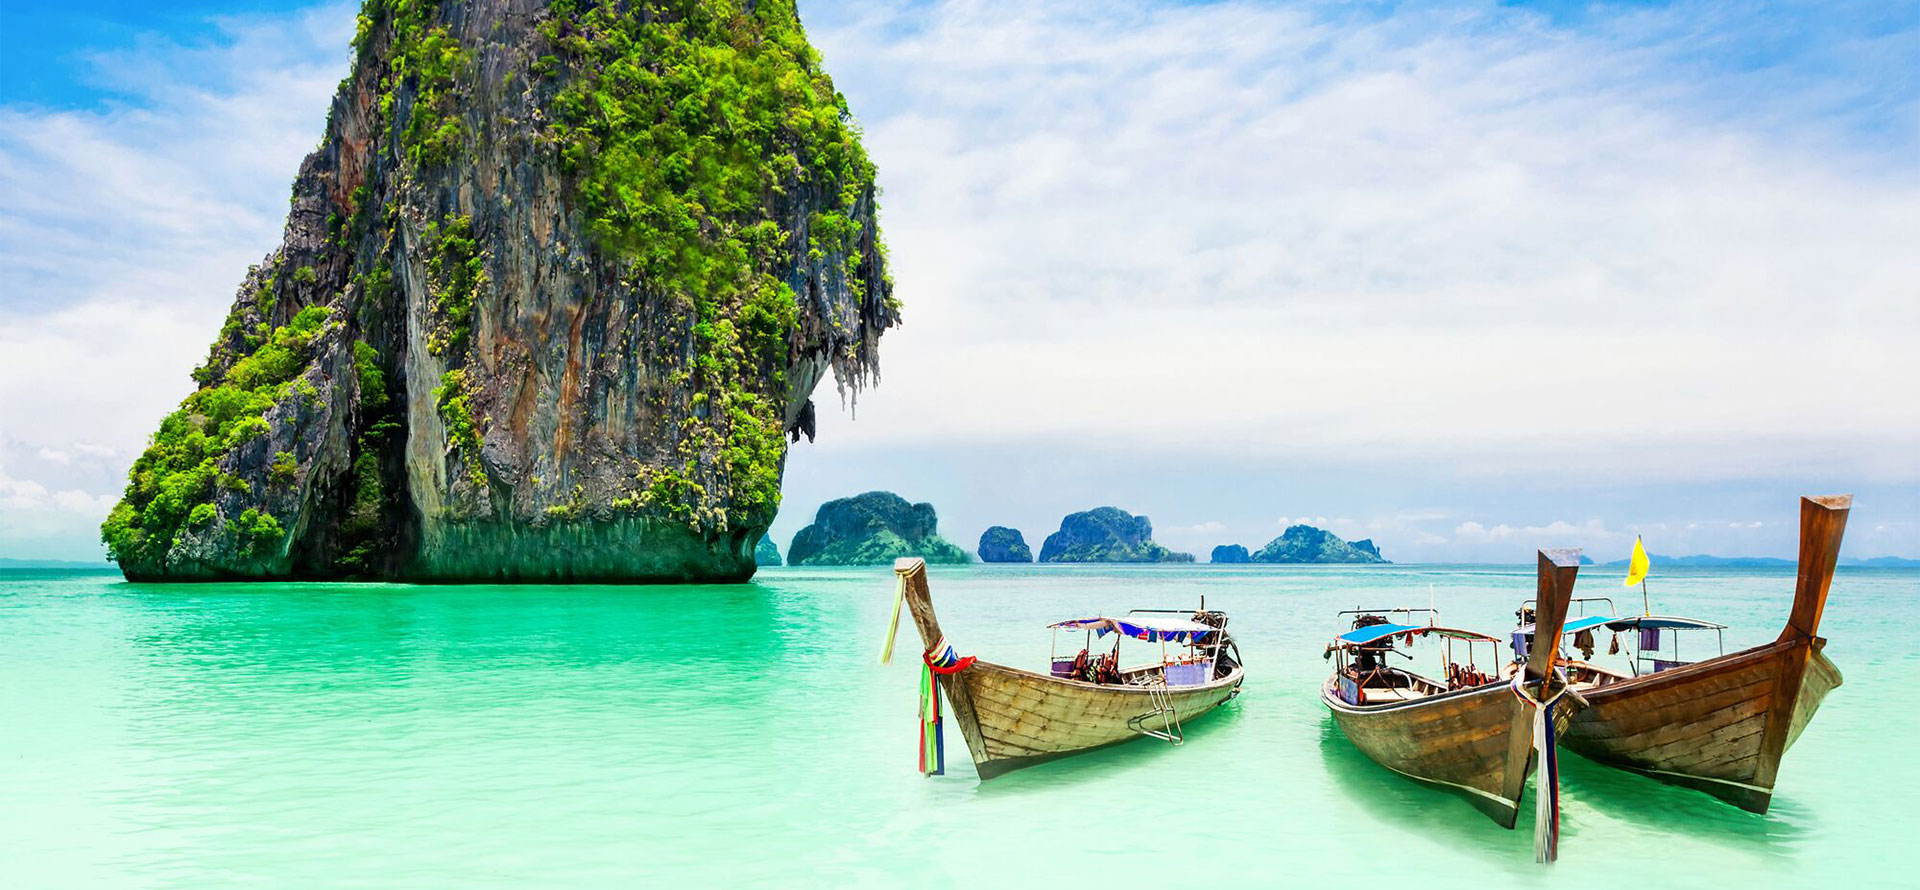 Rocks and beach in Thailand honeymoon resort.